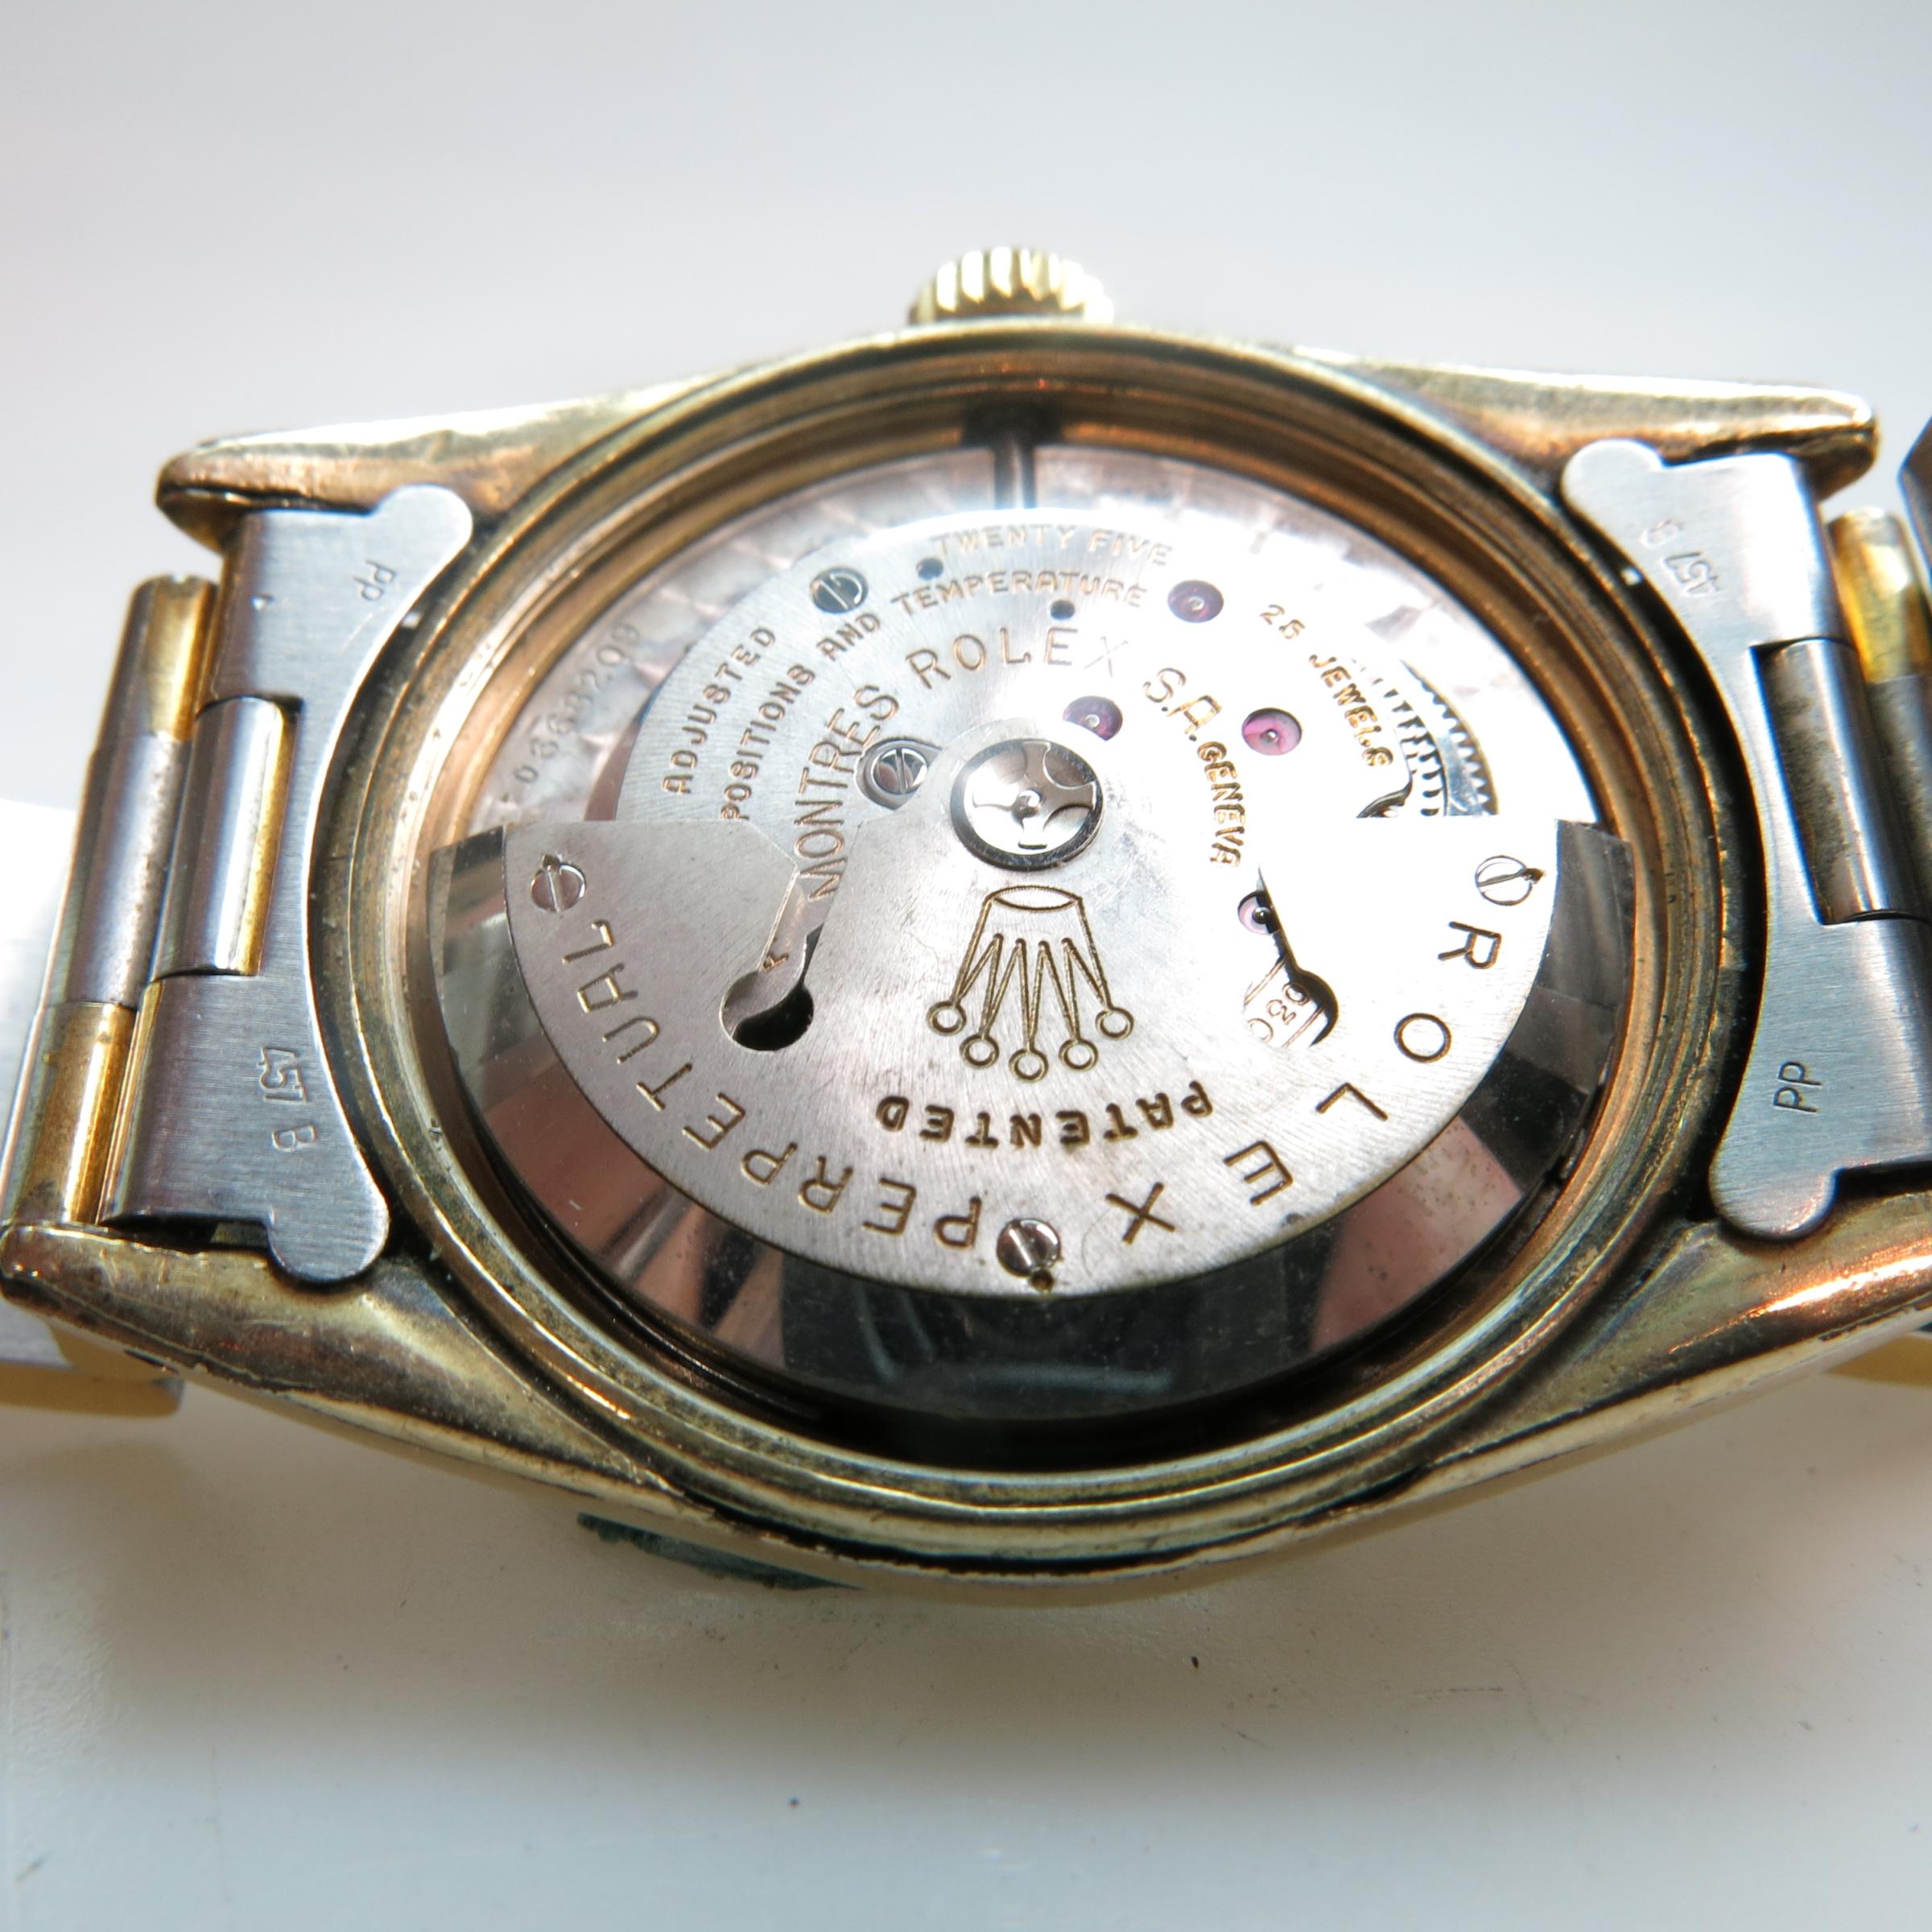 Rolex Oyster Perpetual Precision "Meritus" Wristwatch